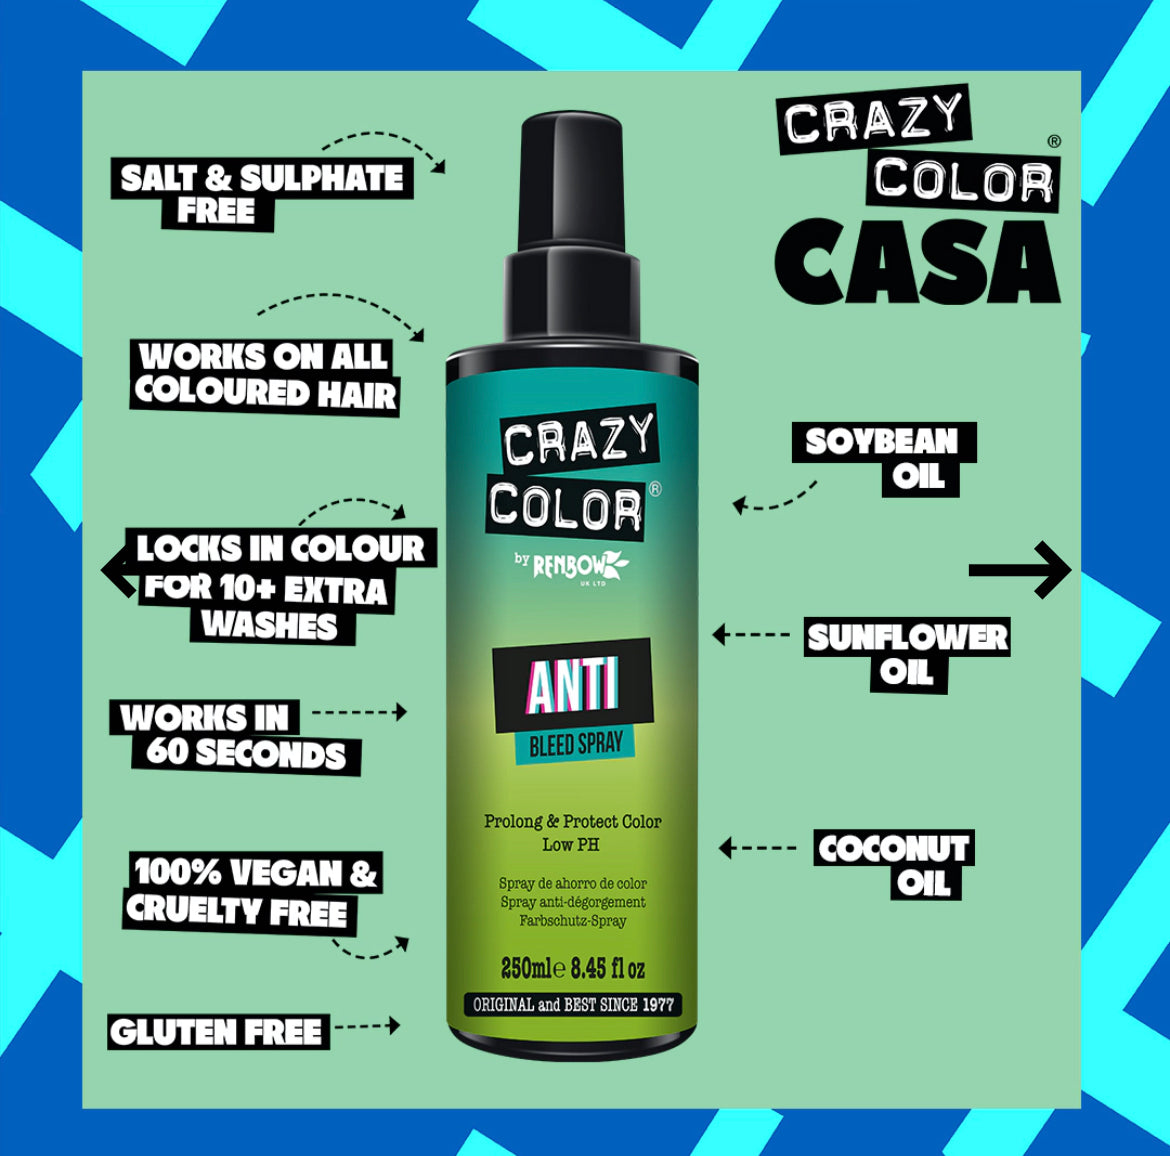 Crazy Color Anti-Bleed Spray